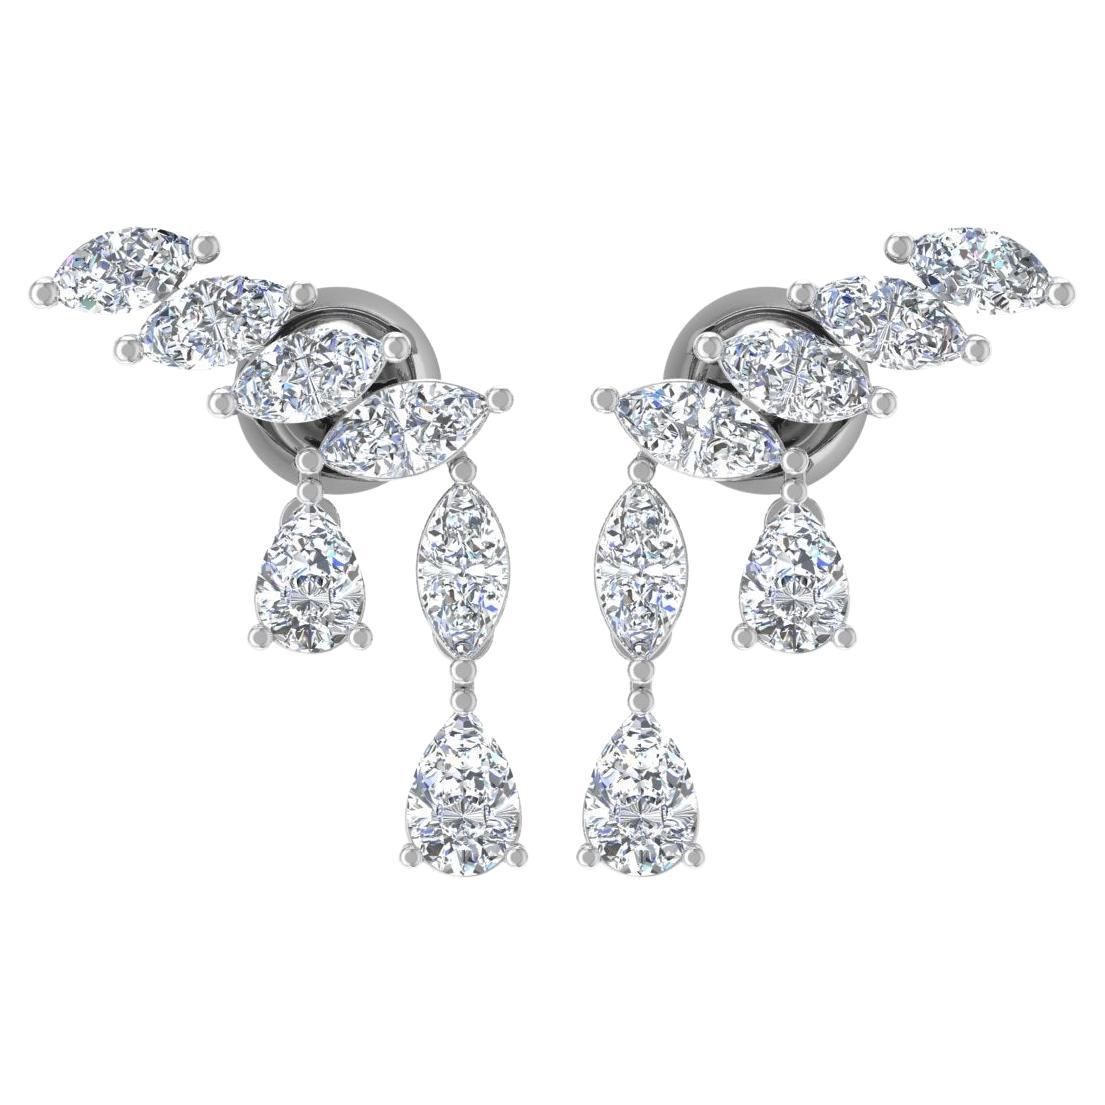 Natural 1 Carat Marquise Pear Diamond Earrings 18 Karat White Gold Fine Jewelry